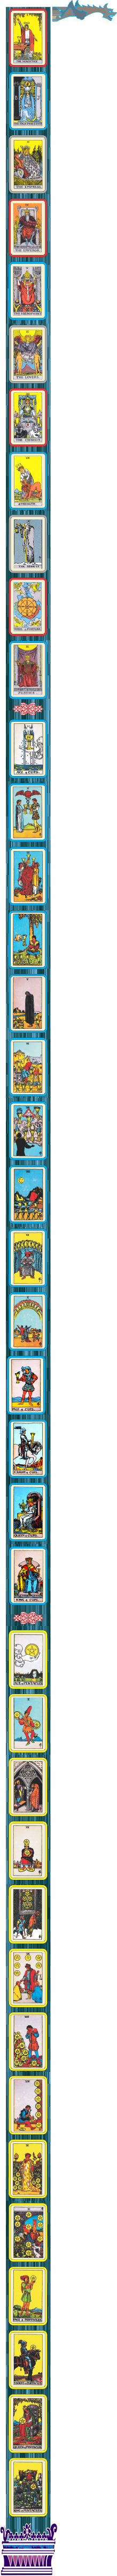 graphic-left gargoyle and column of tarot cards